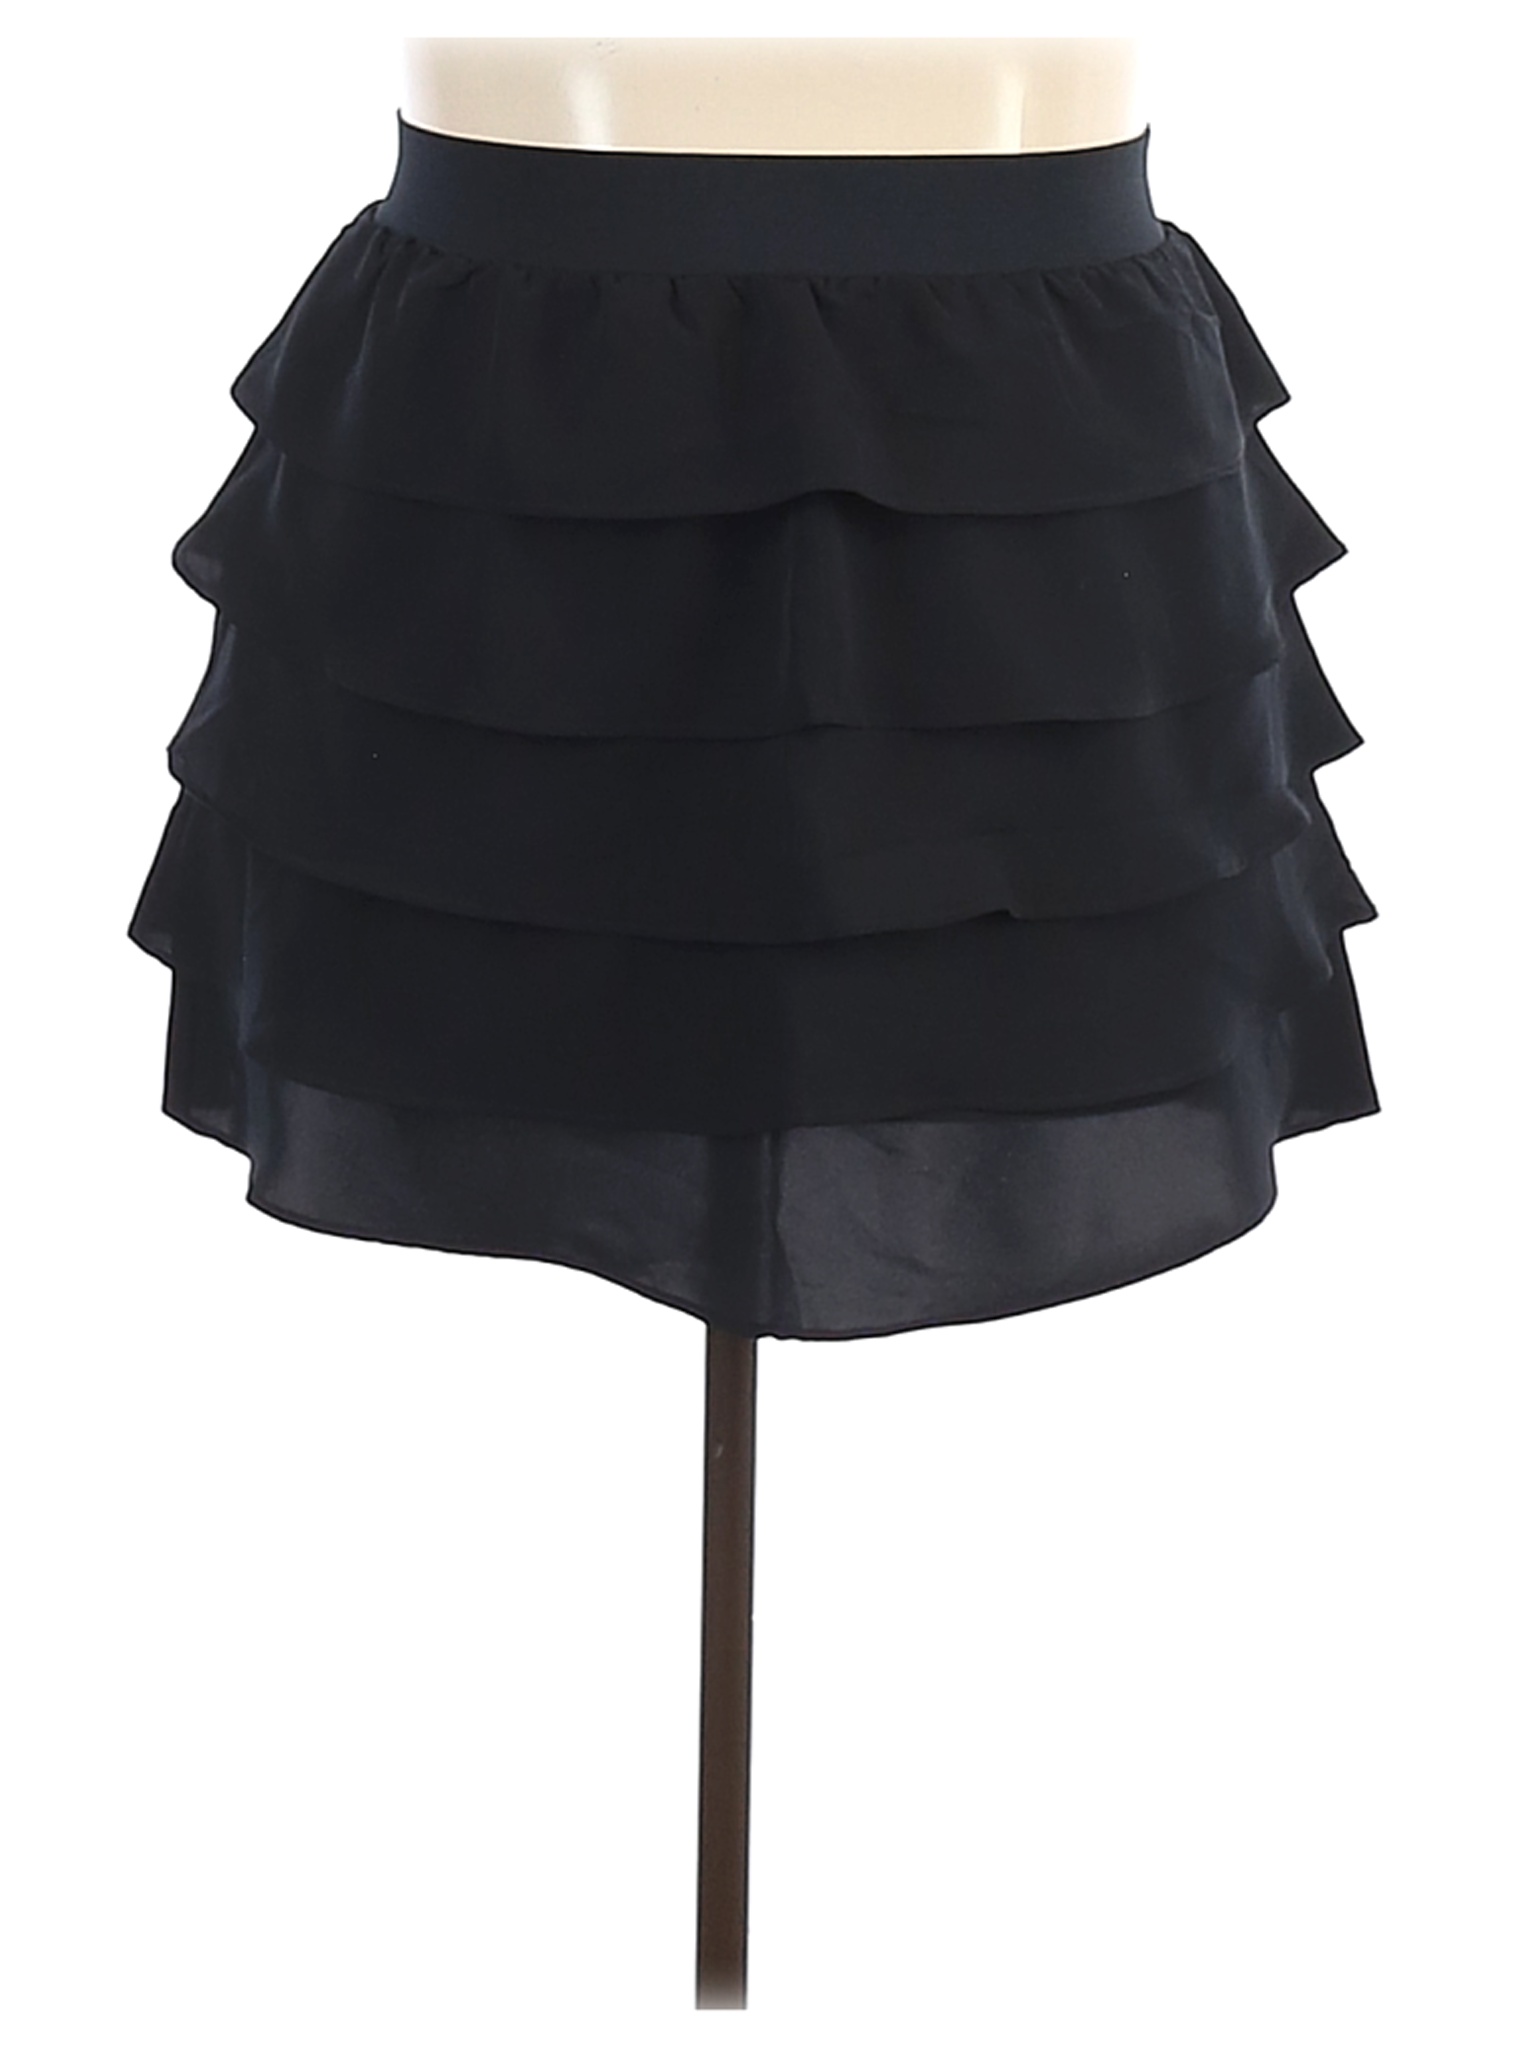 Apt. 9 Women Black Casual Skirt XL | eBay